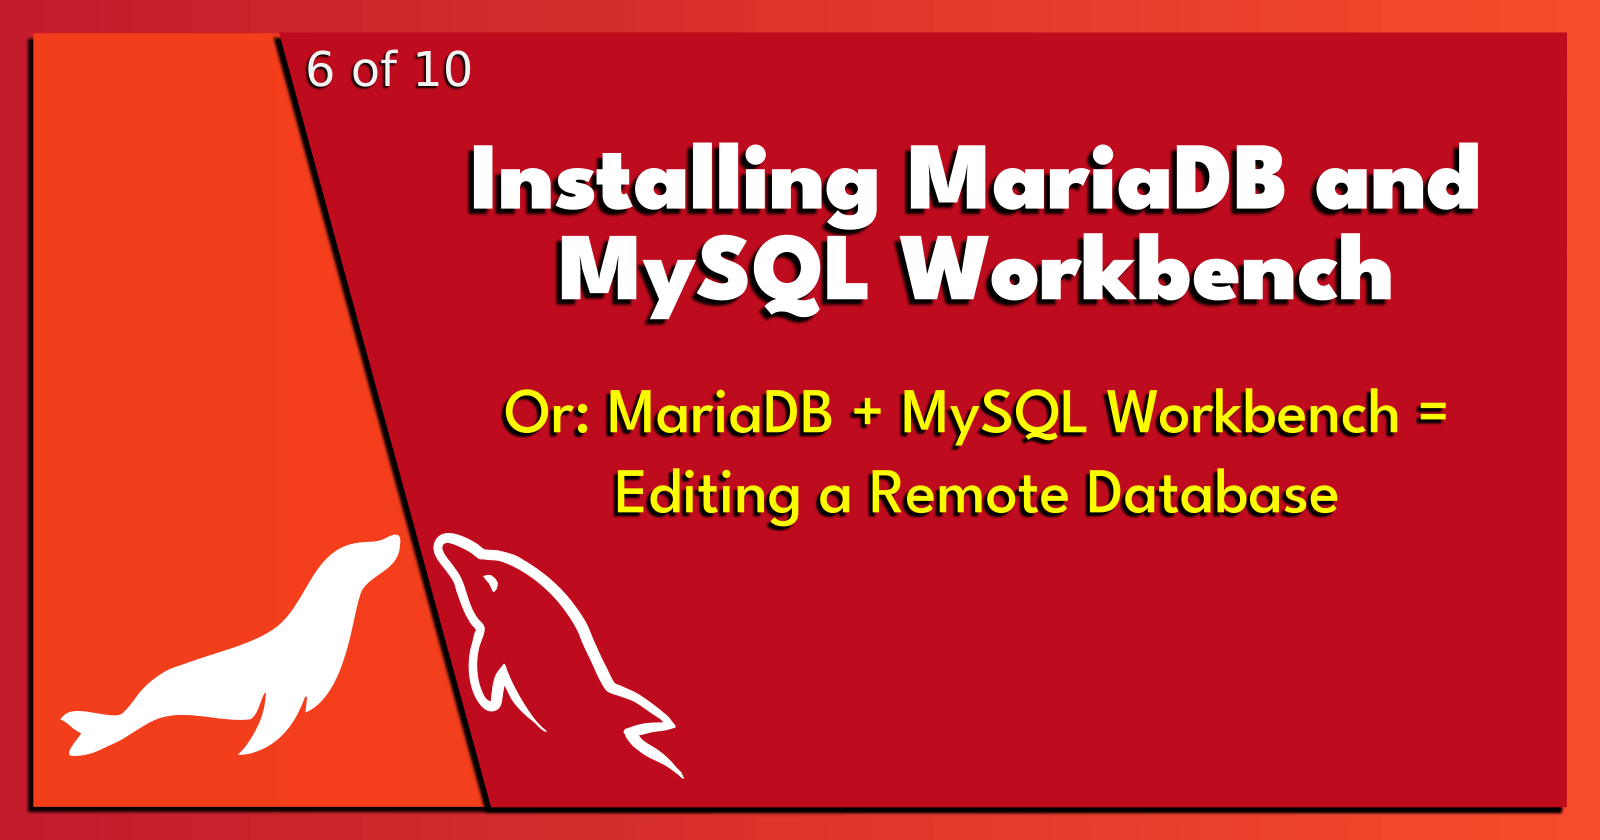 6 of 10: Installing MariaDB and MySQL Workbench.